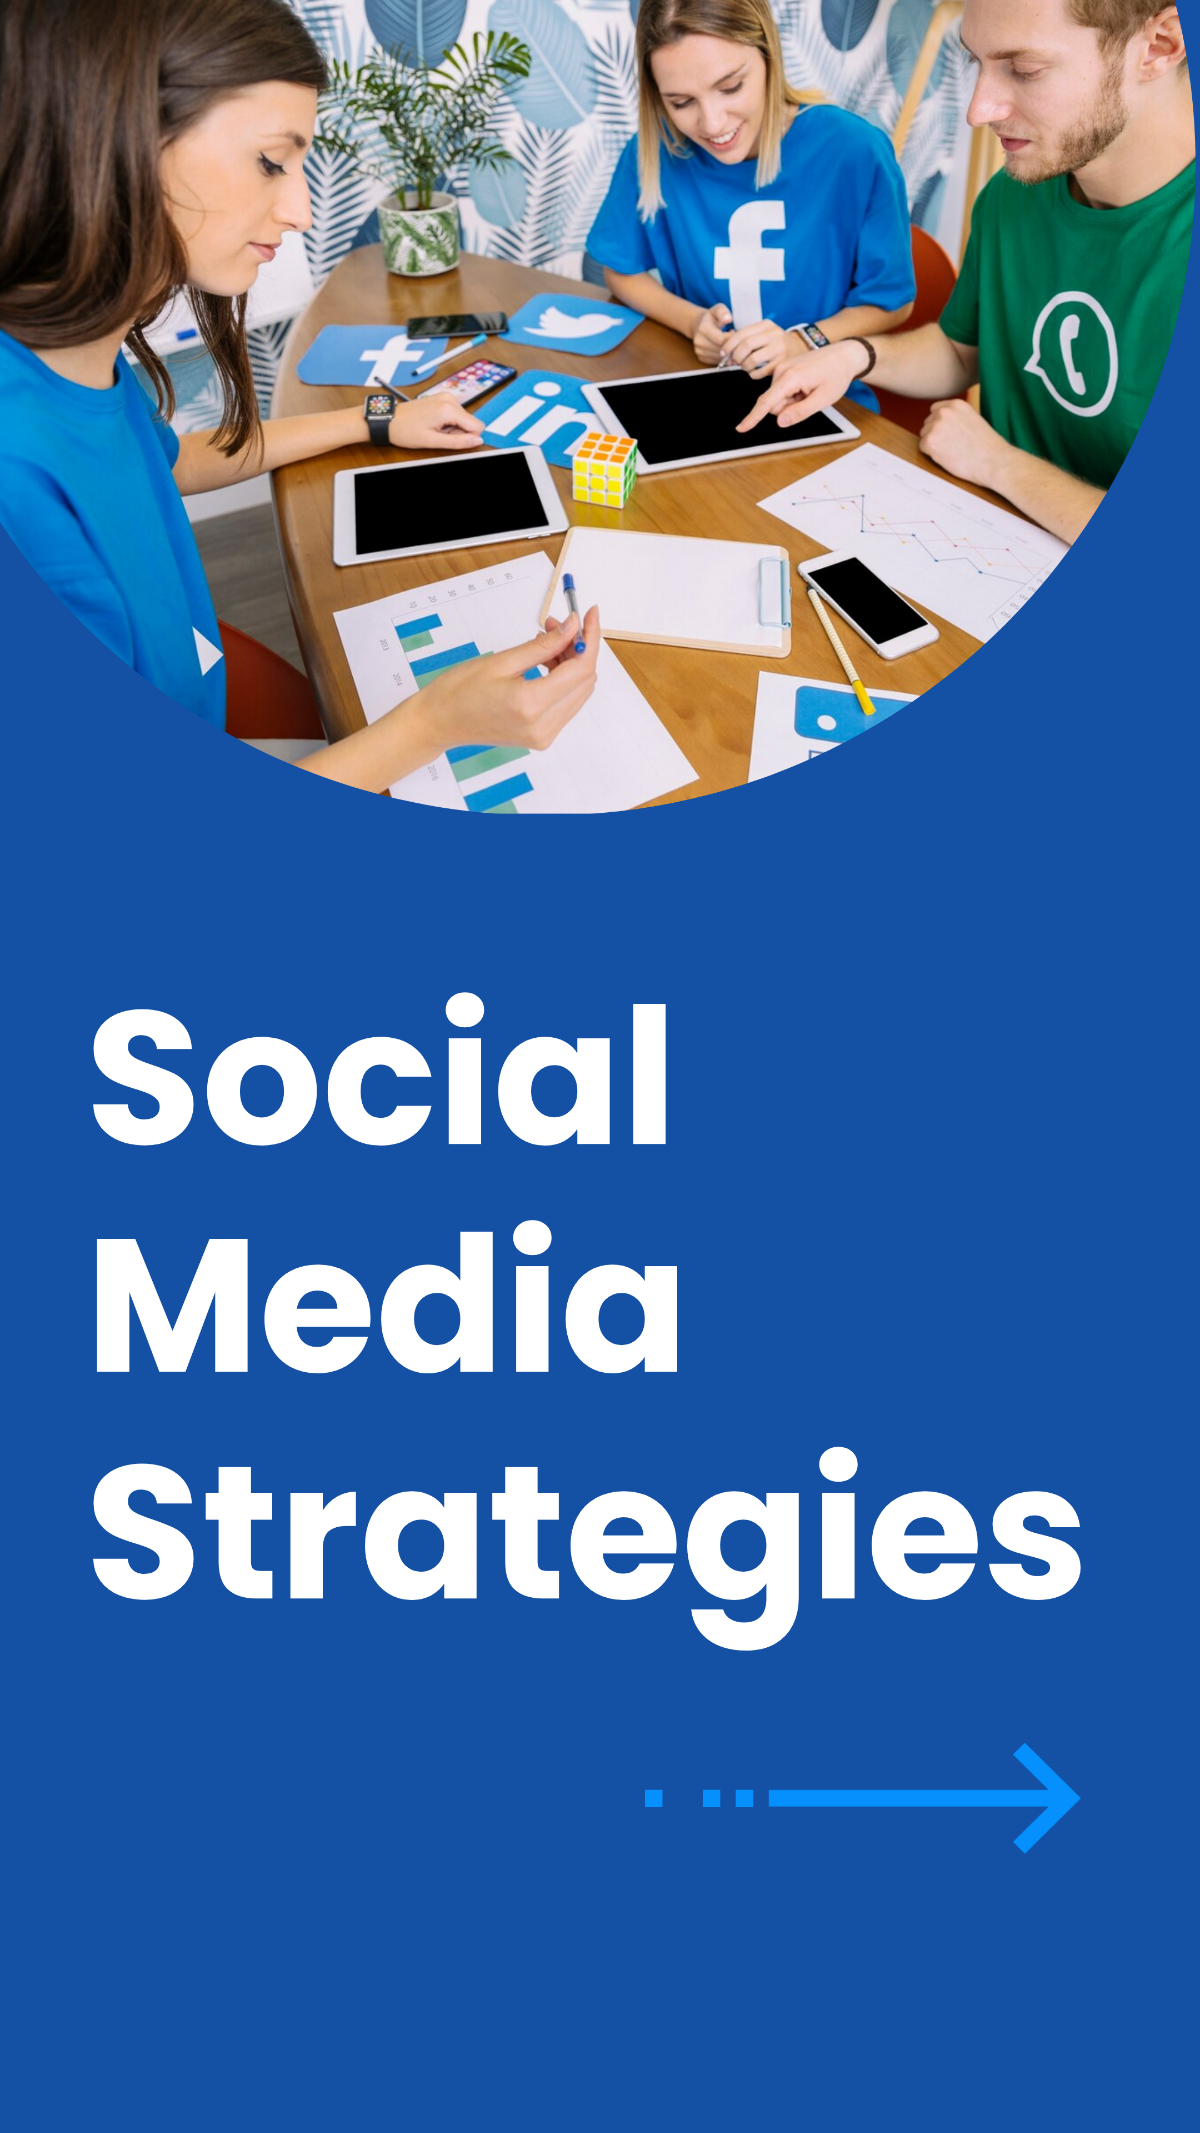 Social Media Strategy Carousel Instagram Post